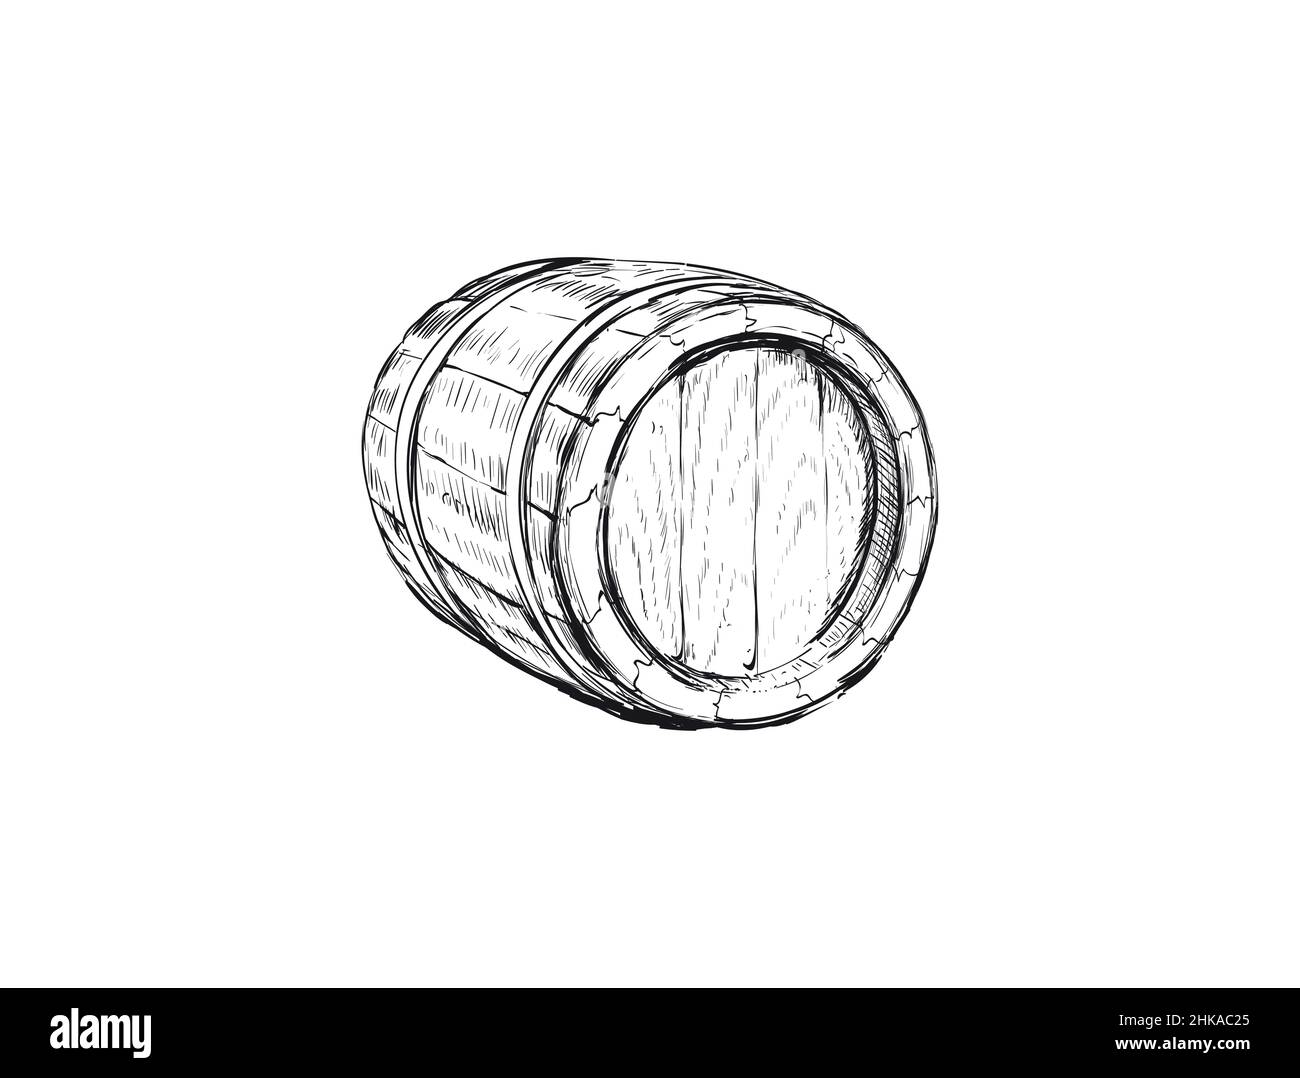 Hand Drawn Old Wine Barrel Vector Illustration Hand Drawn Old Wine Barrel Vector Illustration Stock Vector